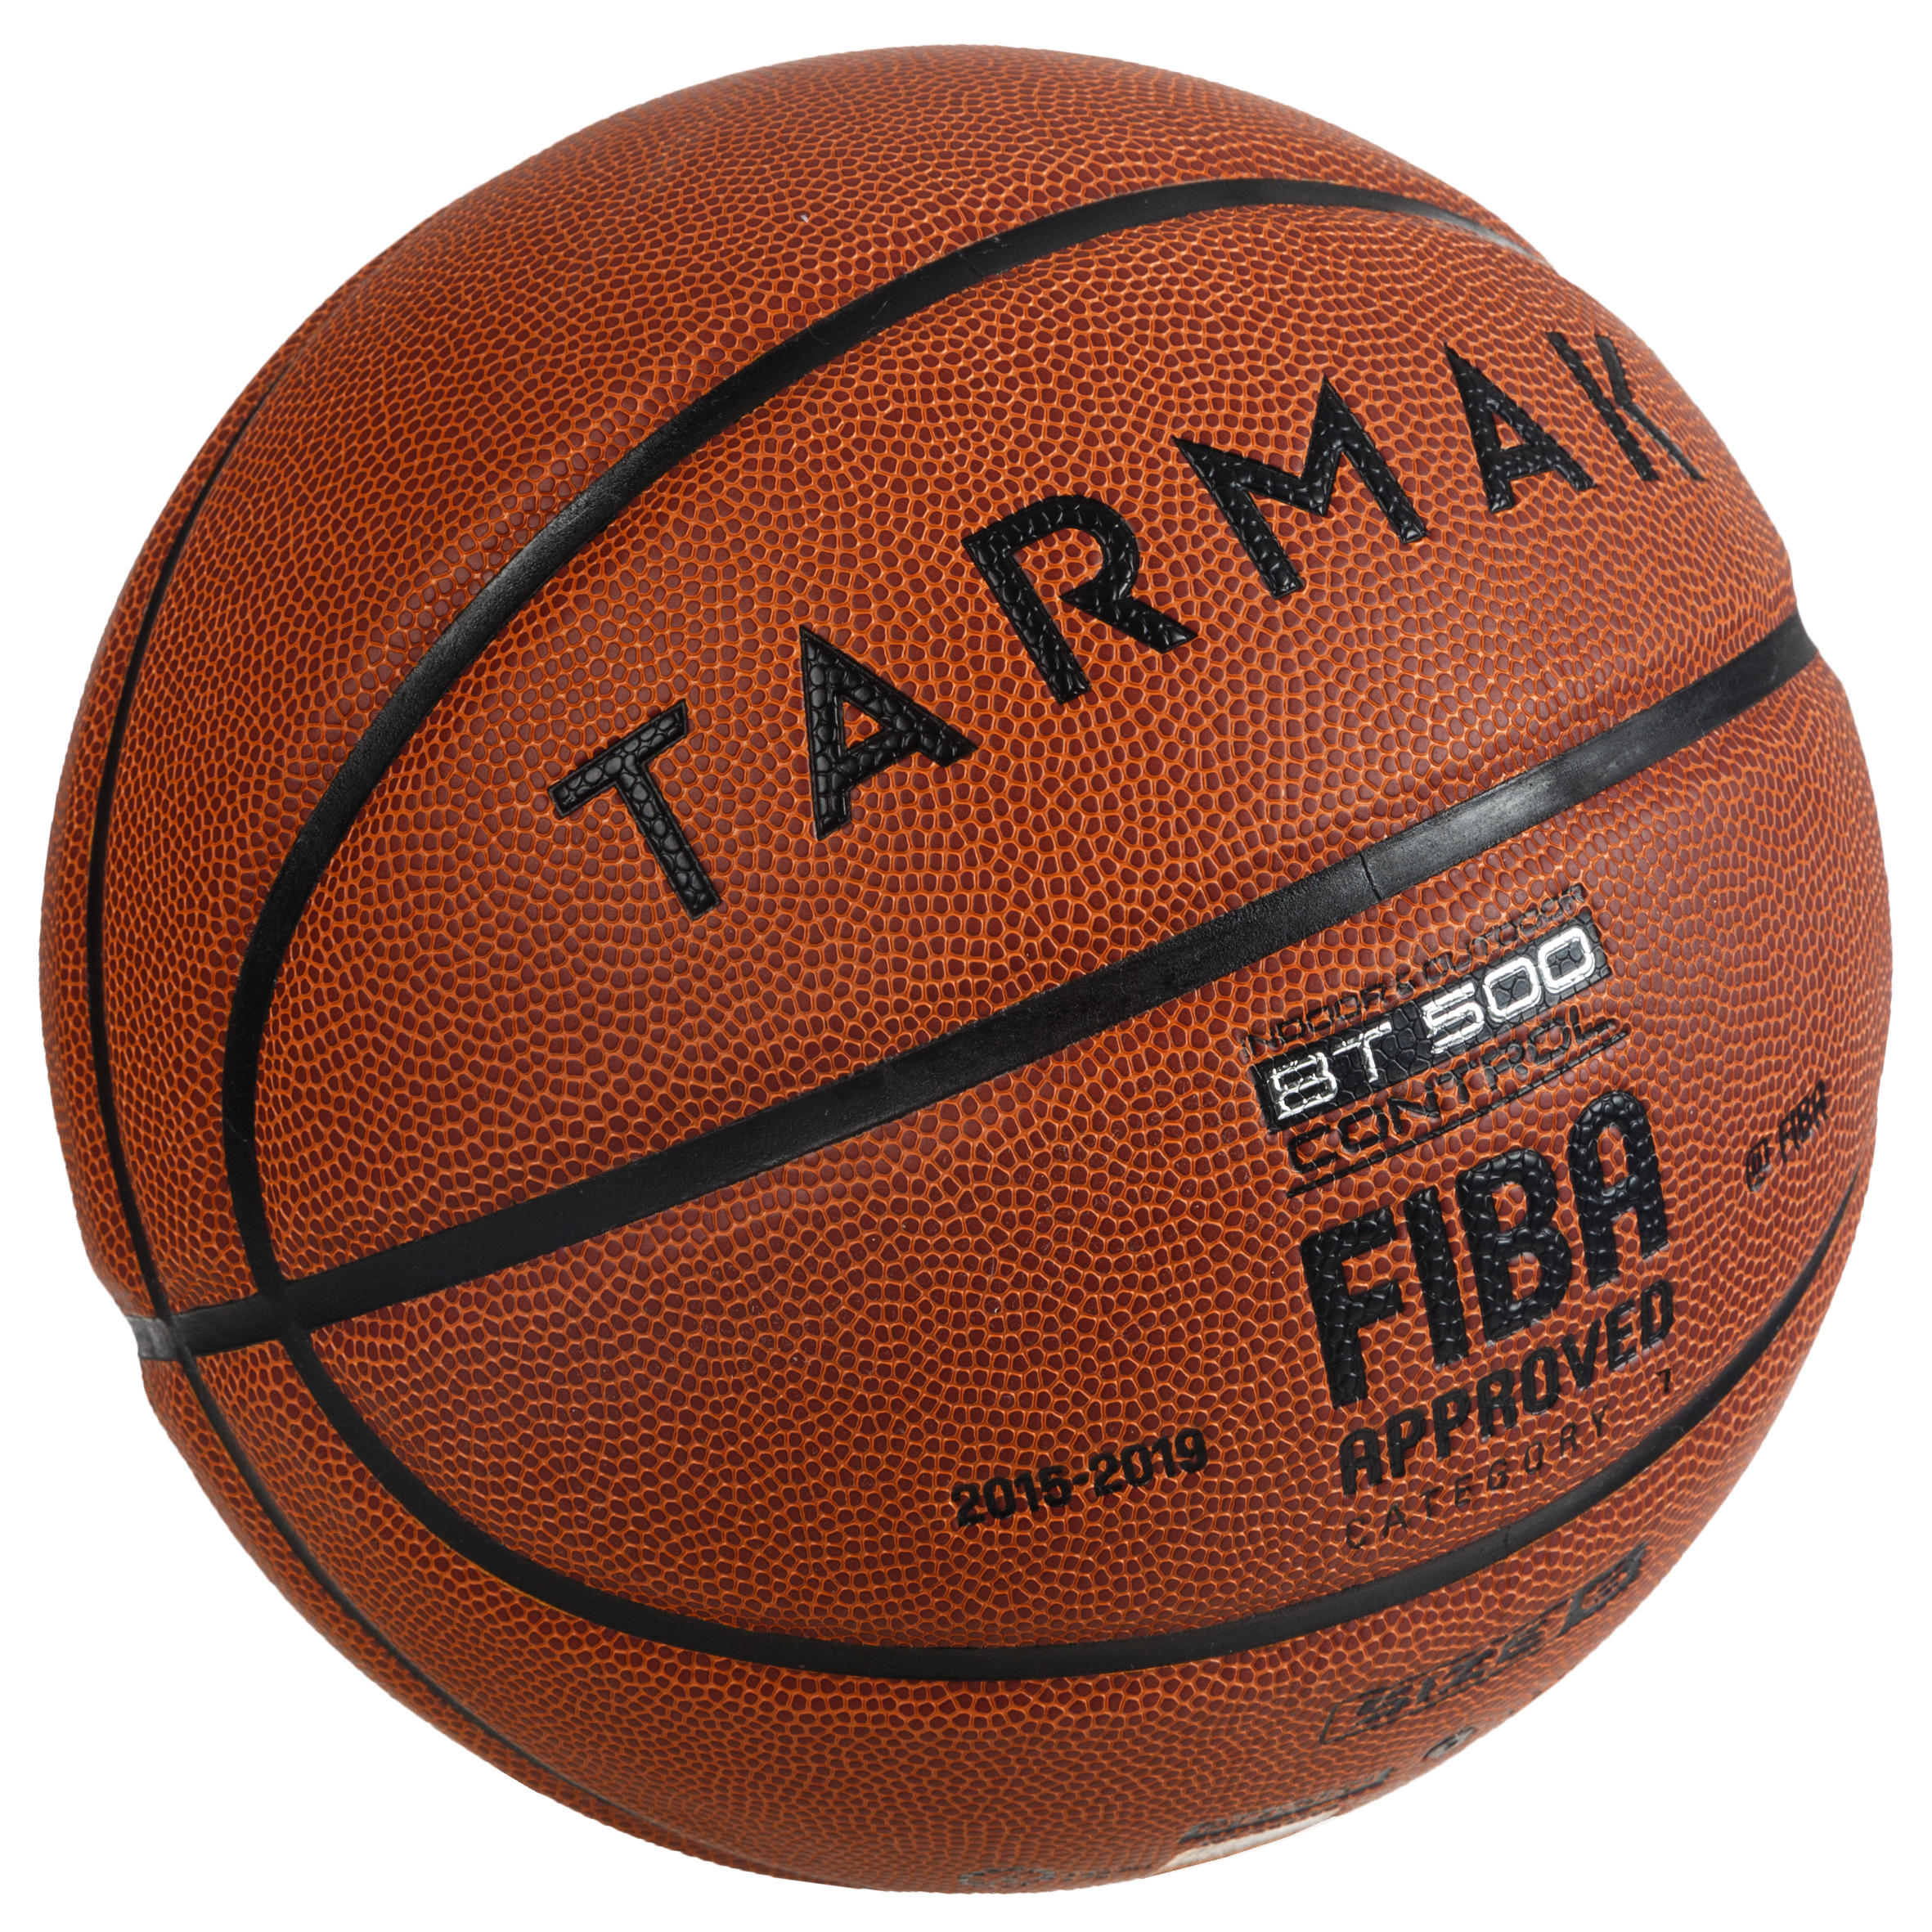 Basketball BT500 - Brown/Fiba 